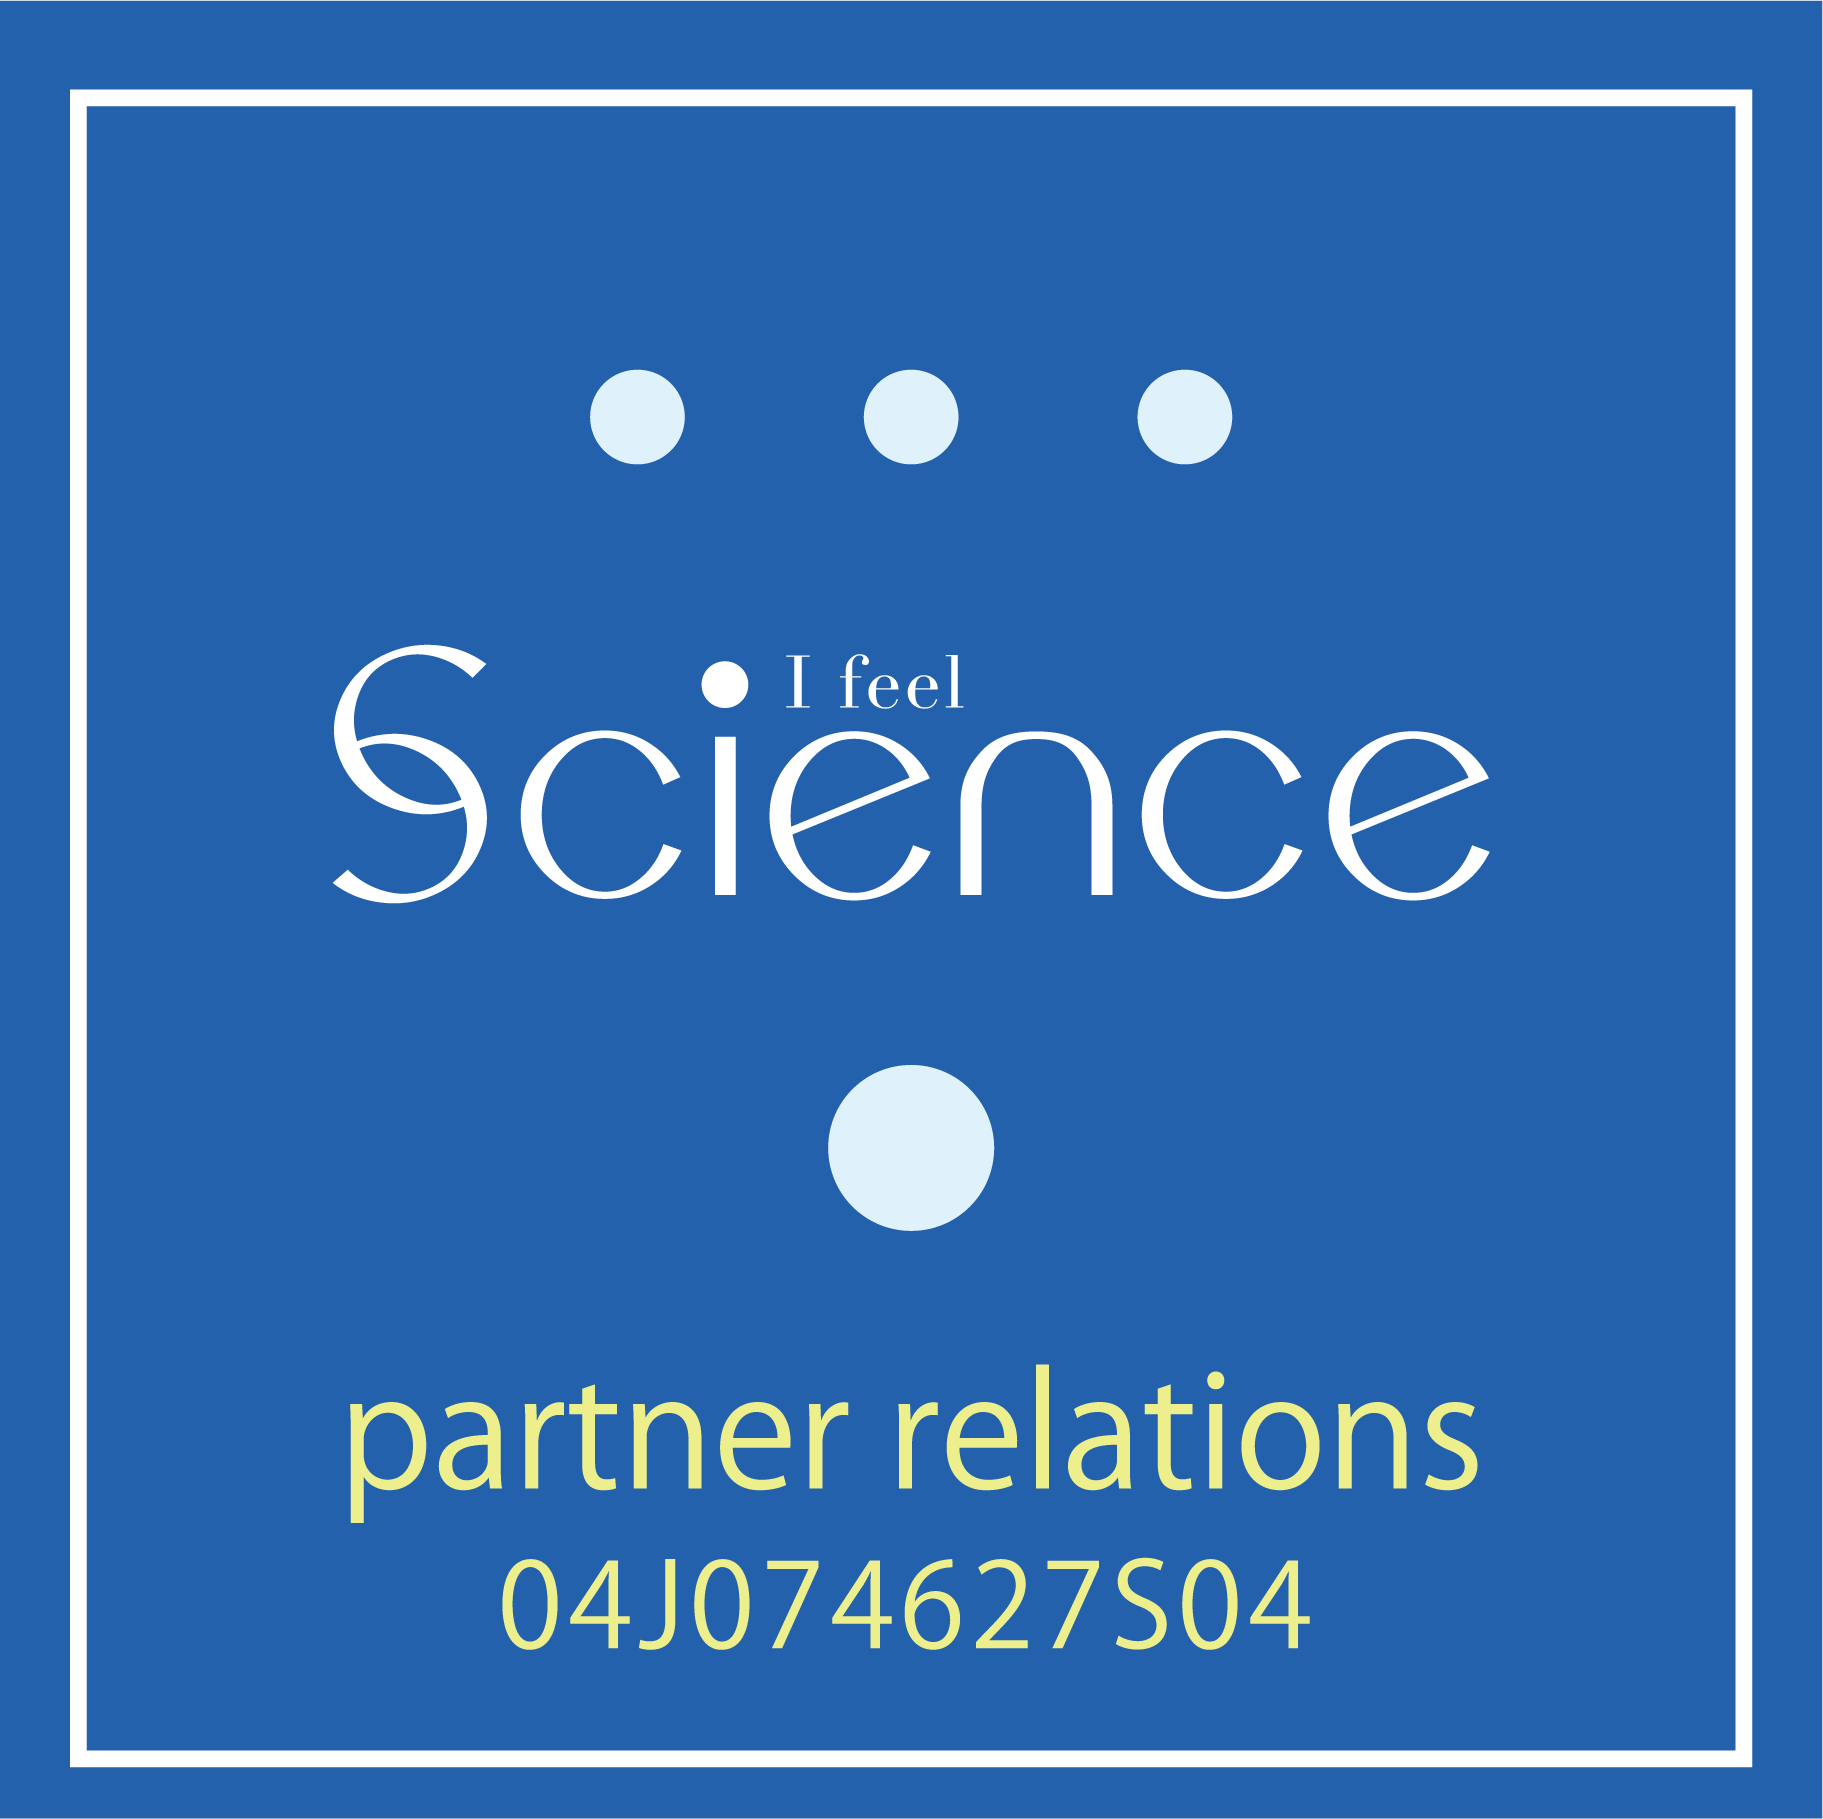 I feel Science partner relations